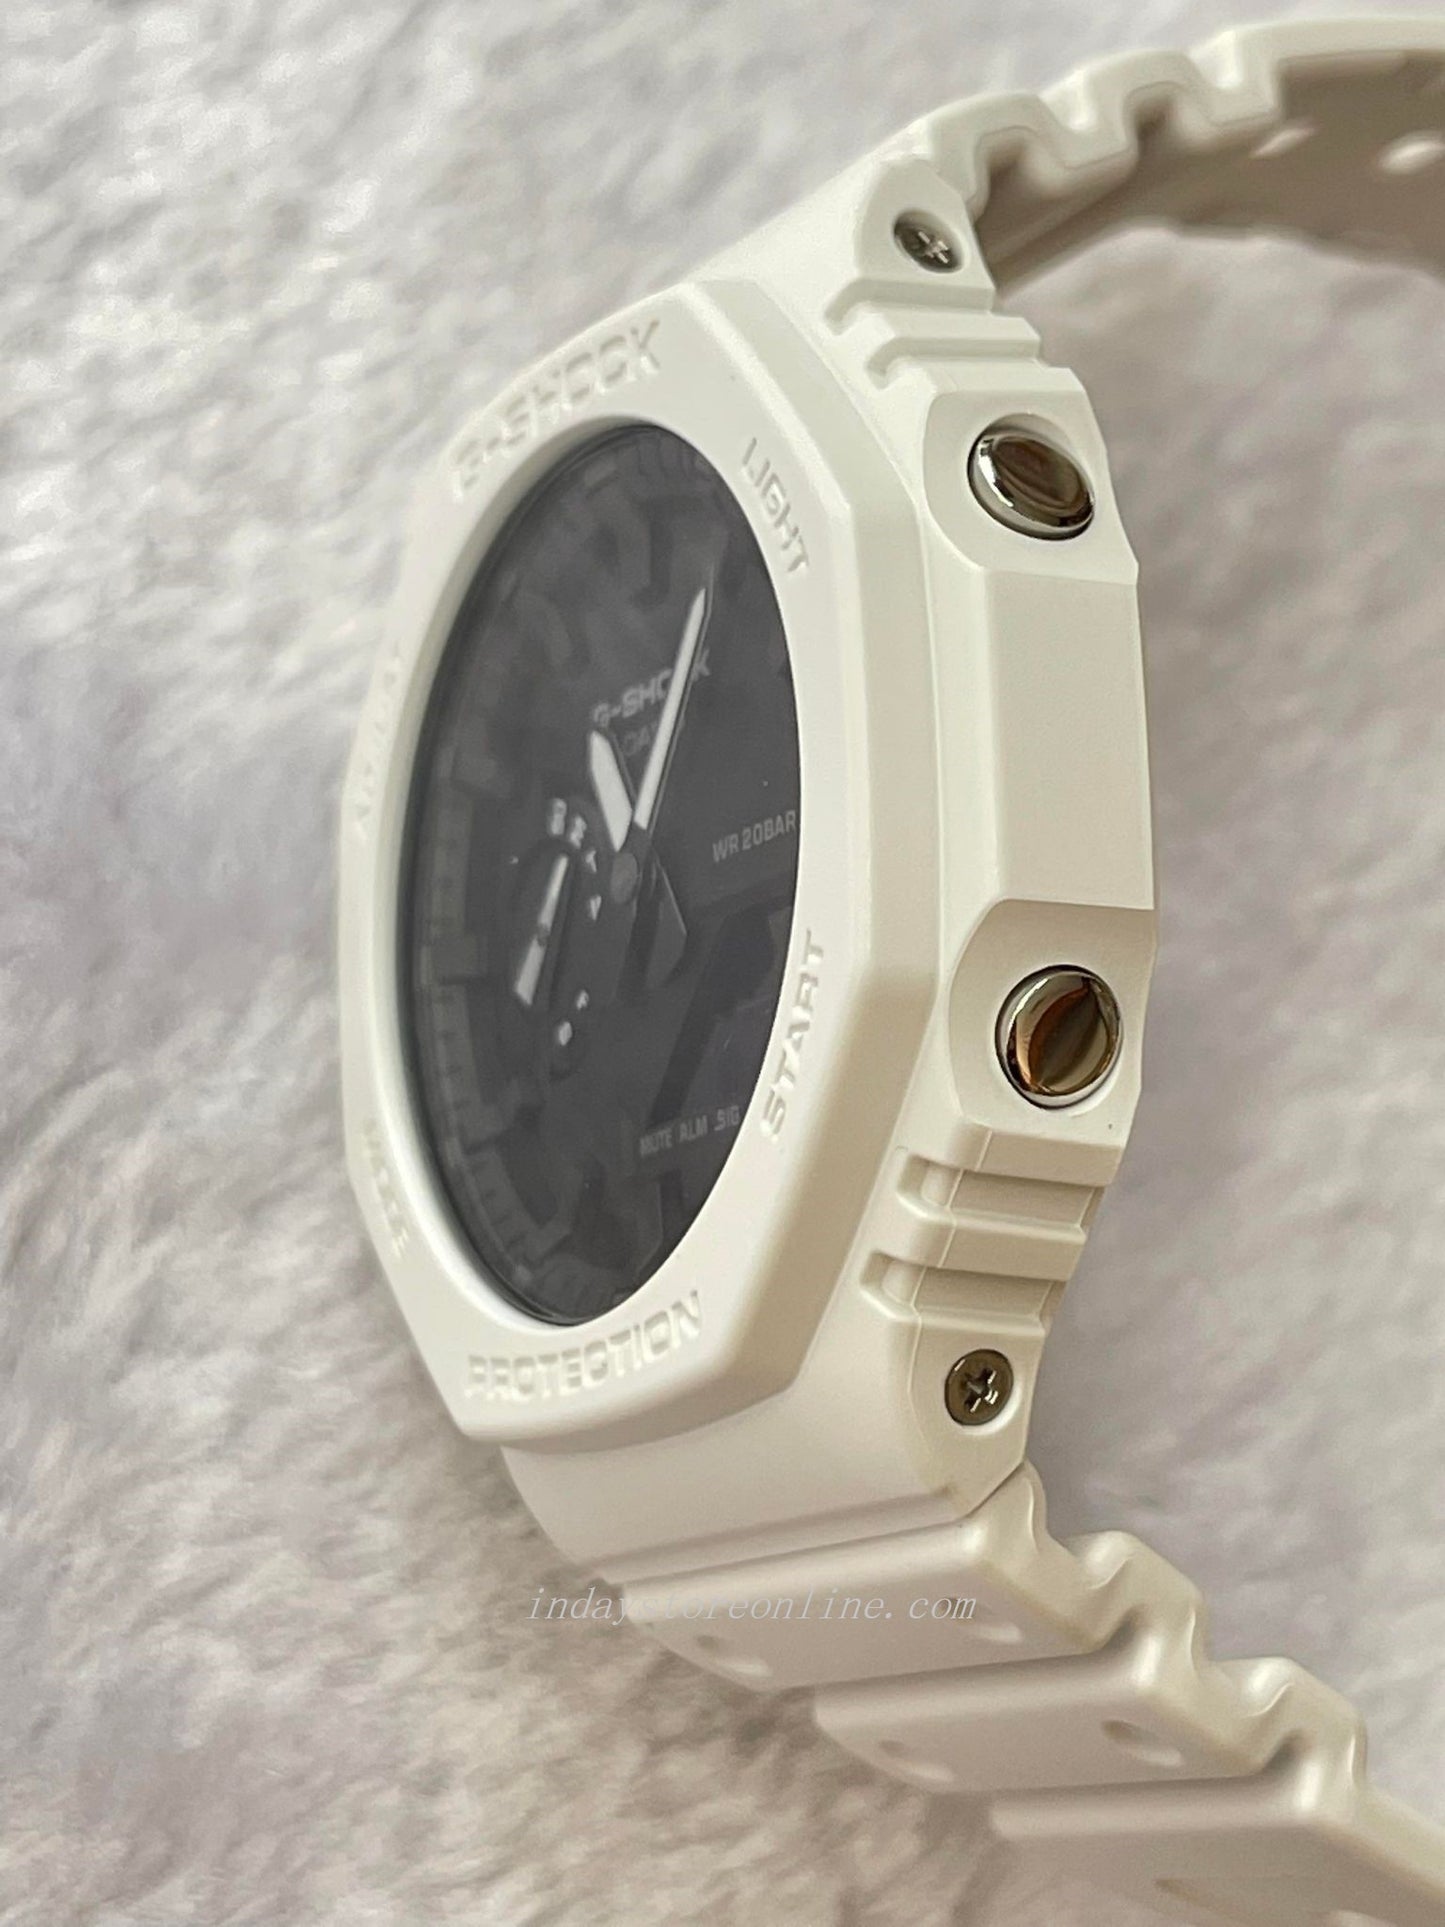 Casio G-Shock Men's Watch GA-2100-7A